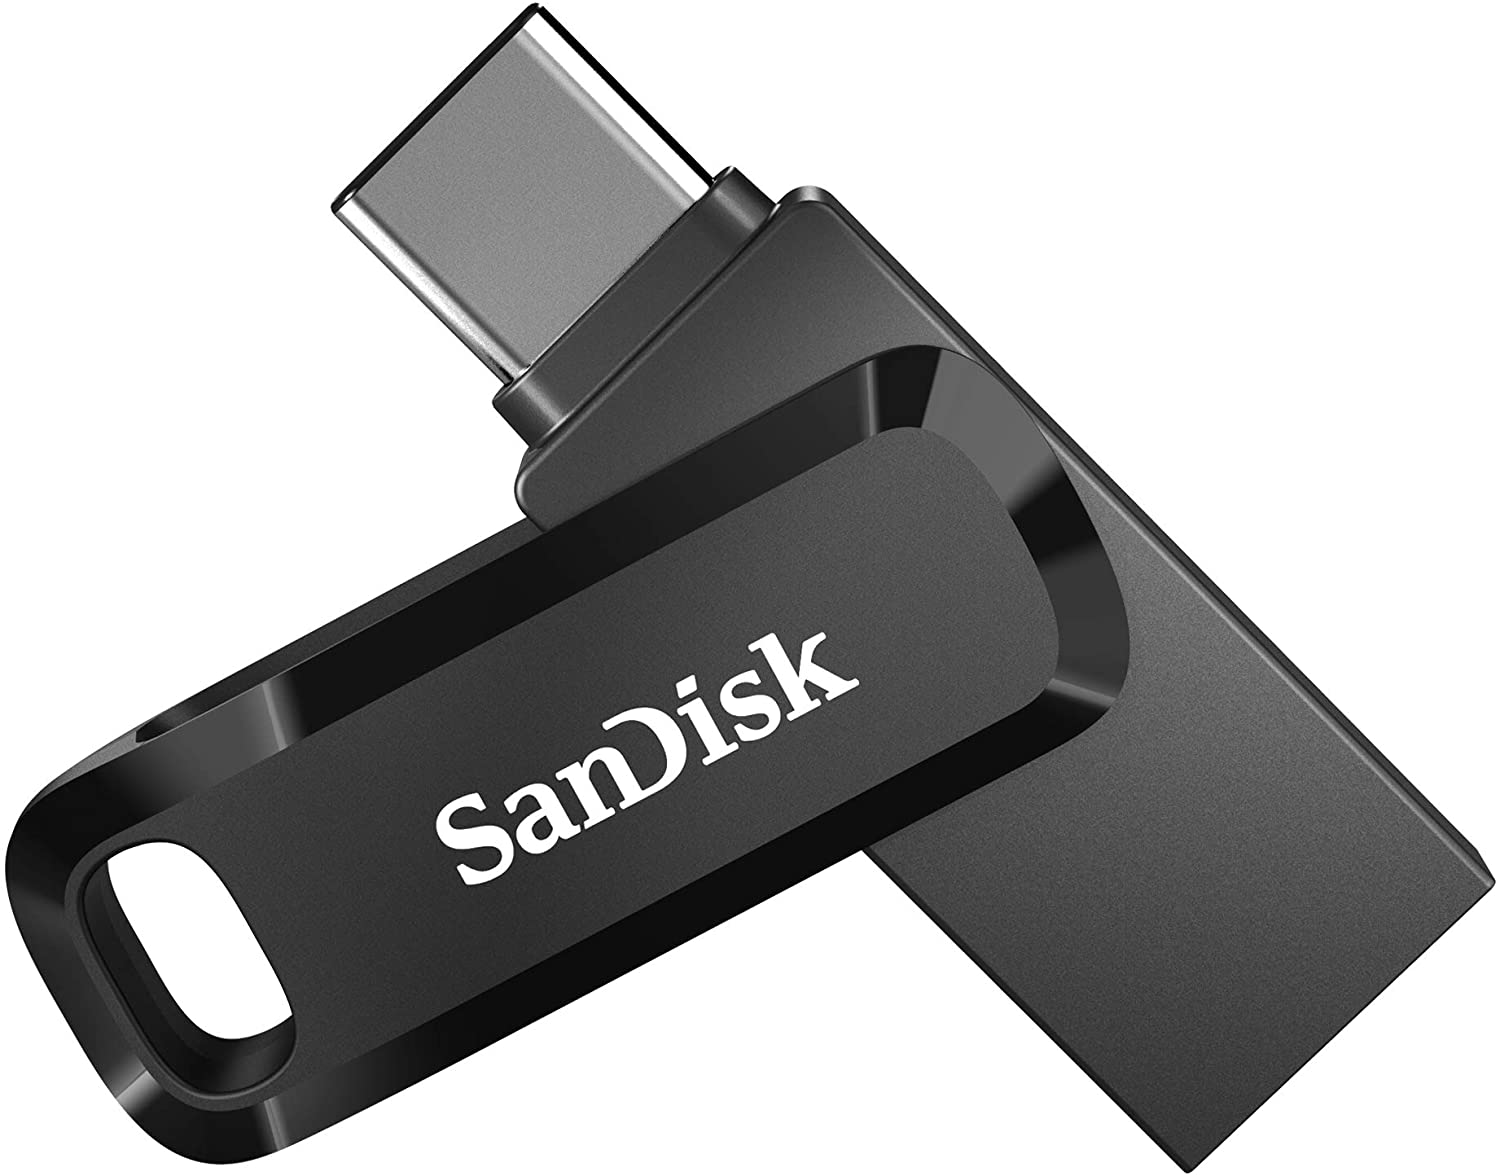 SANDISK FLASH DRIVE-DUAL 3.0 256GB